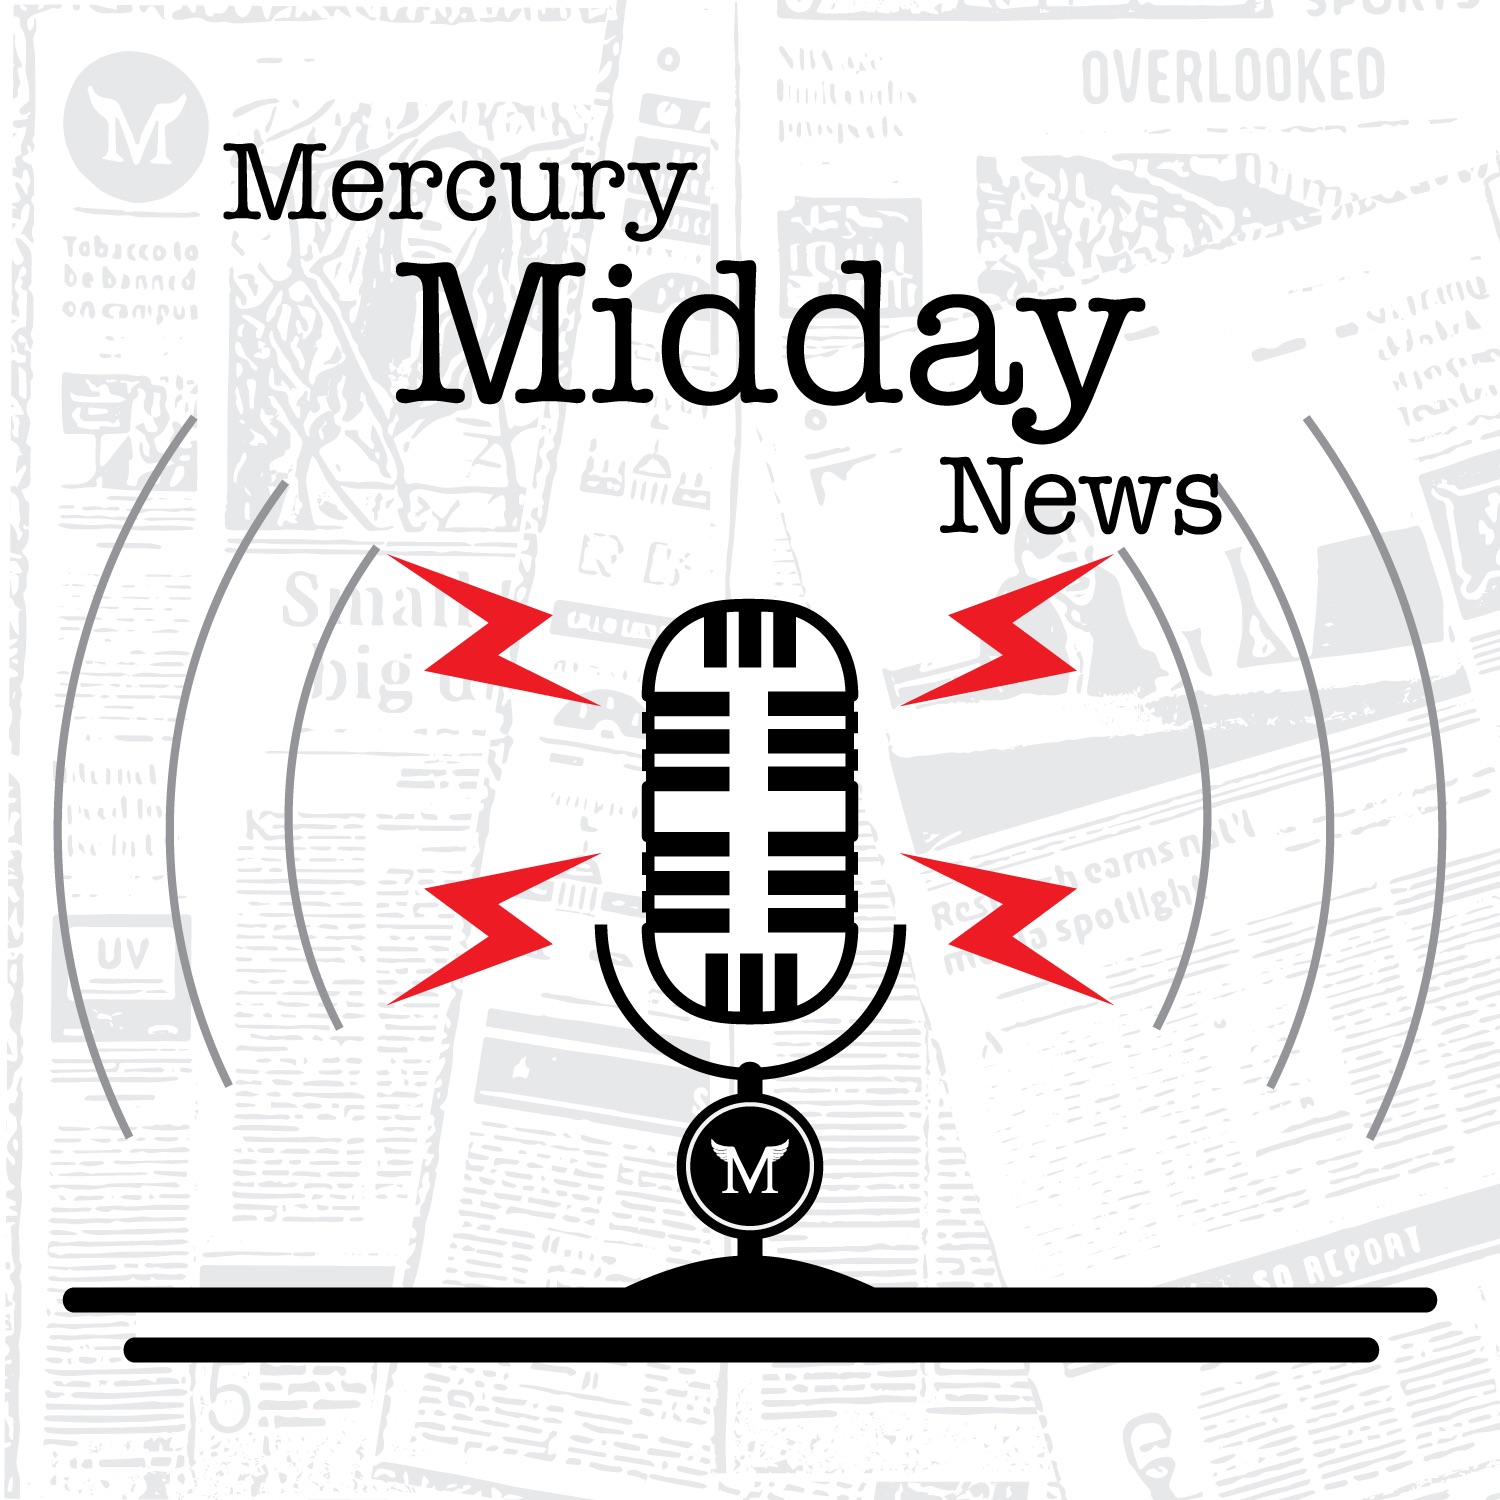 Mercury Midday News 4/27/17